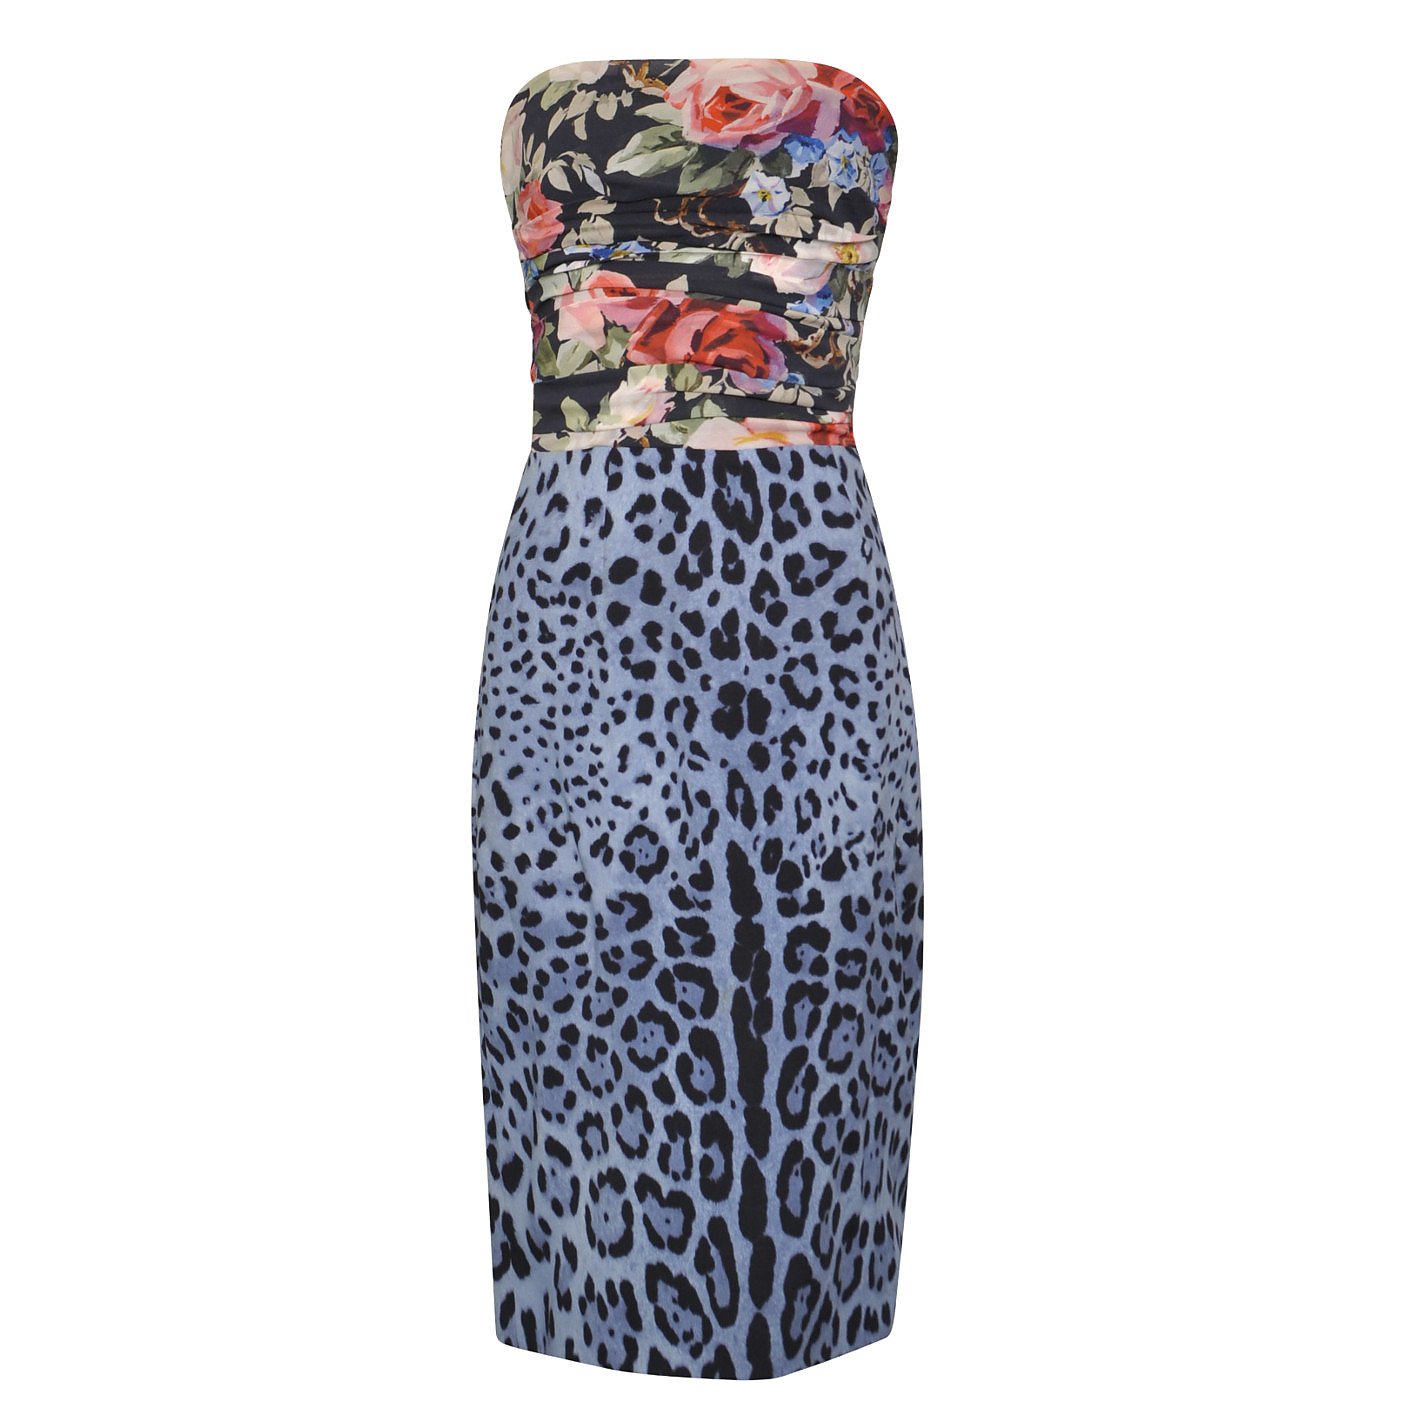 DOLCE & GABBANA Strapless Floral & Leopard Print Dress